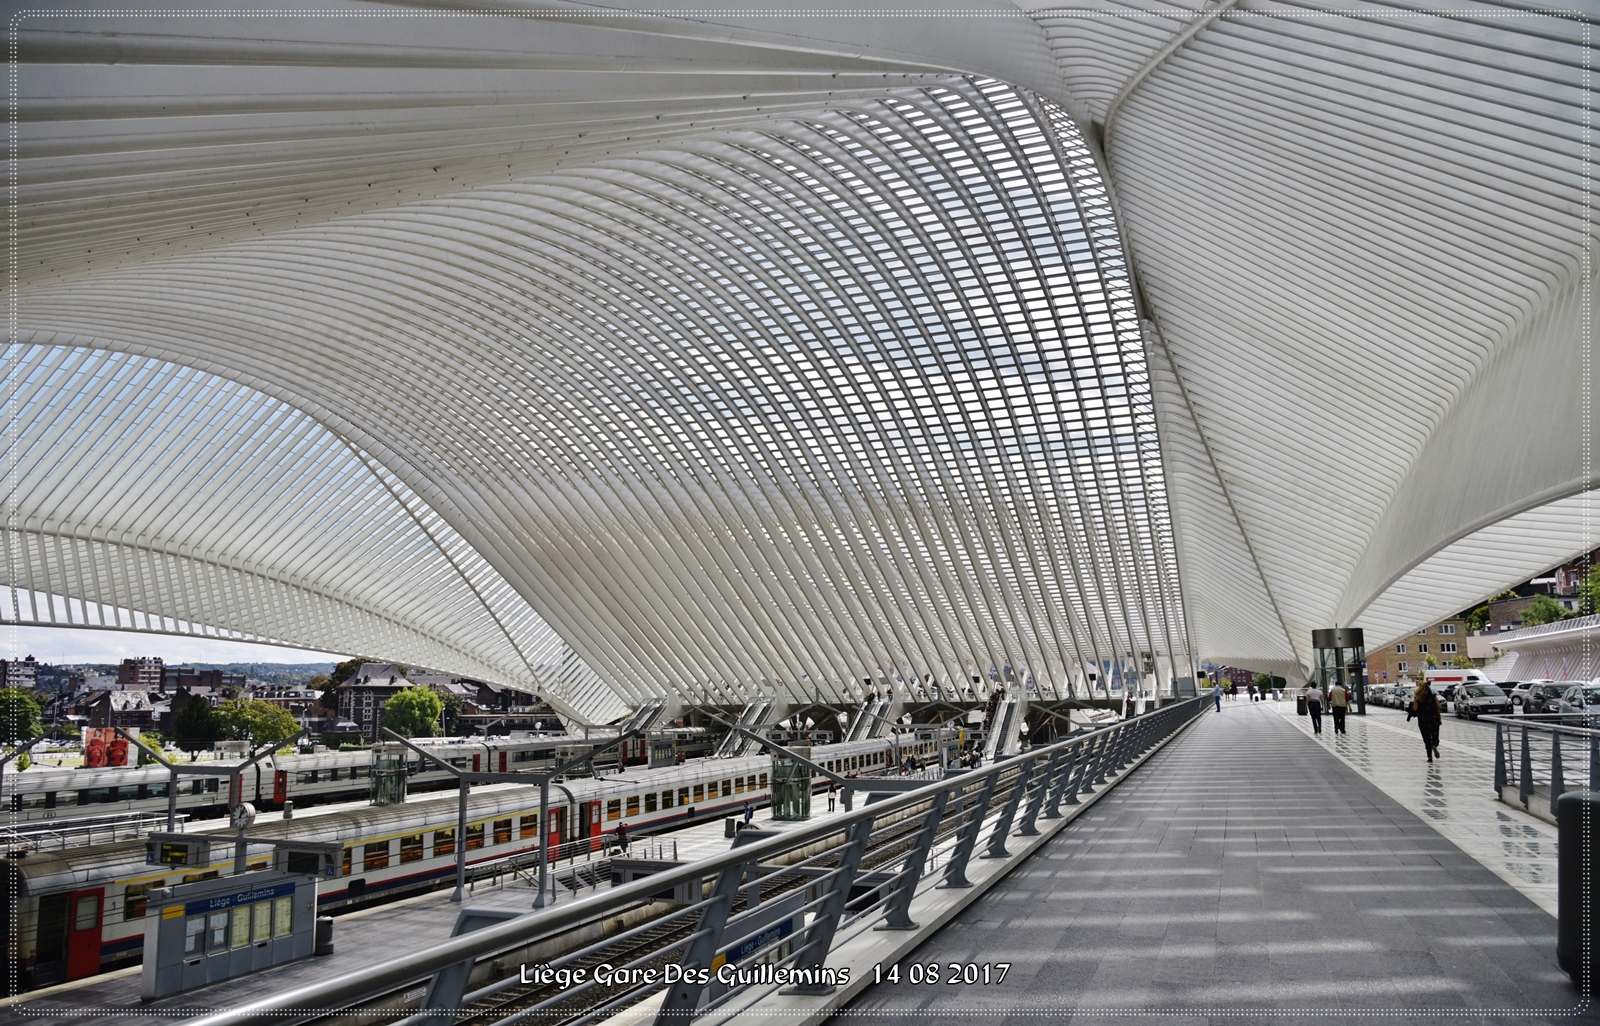 gare des guillemins Liege Guillemins Railway Station by Santiago Calatrava